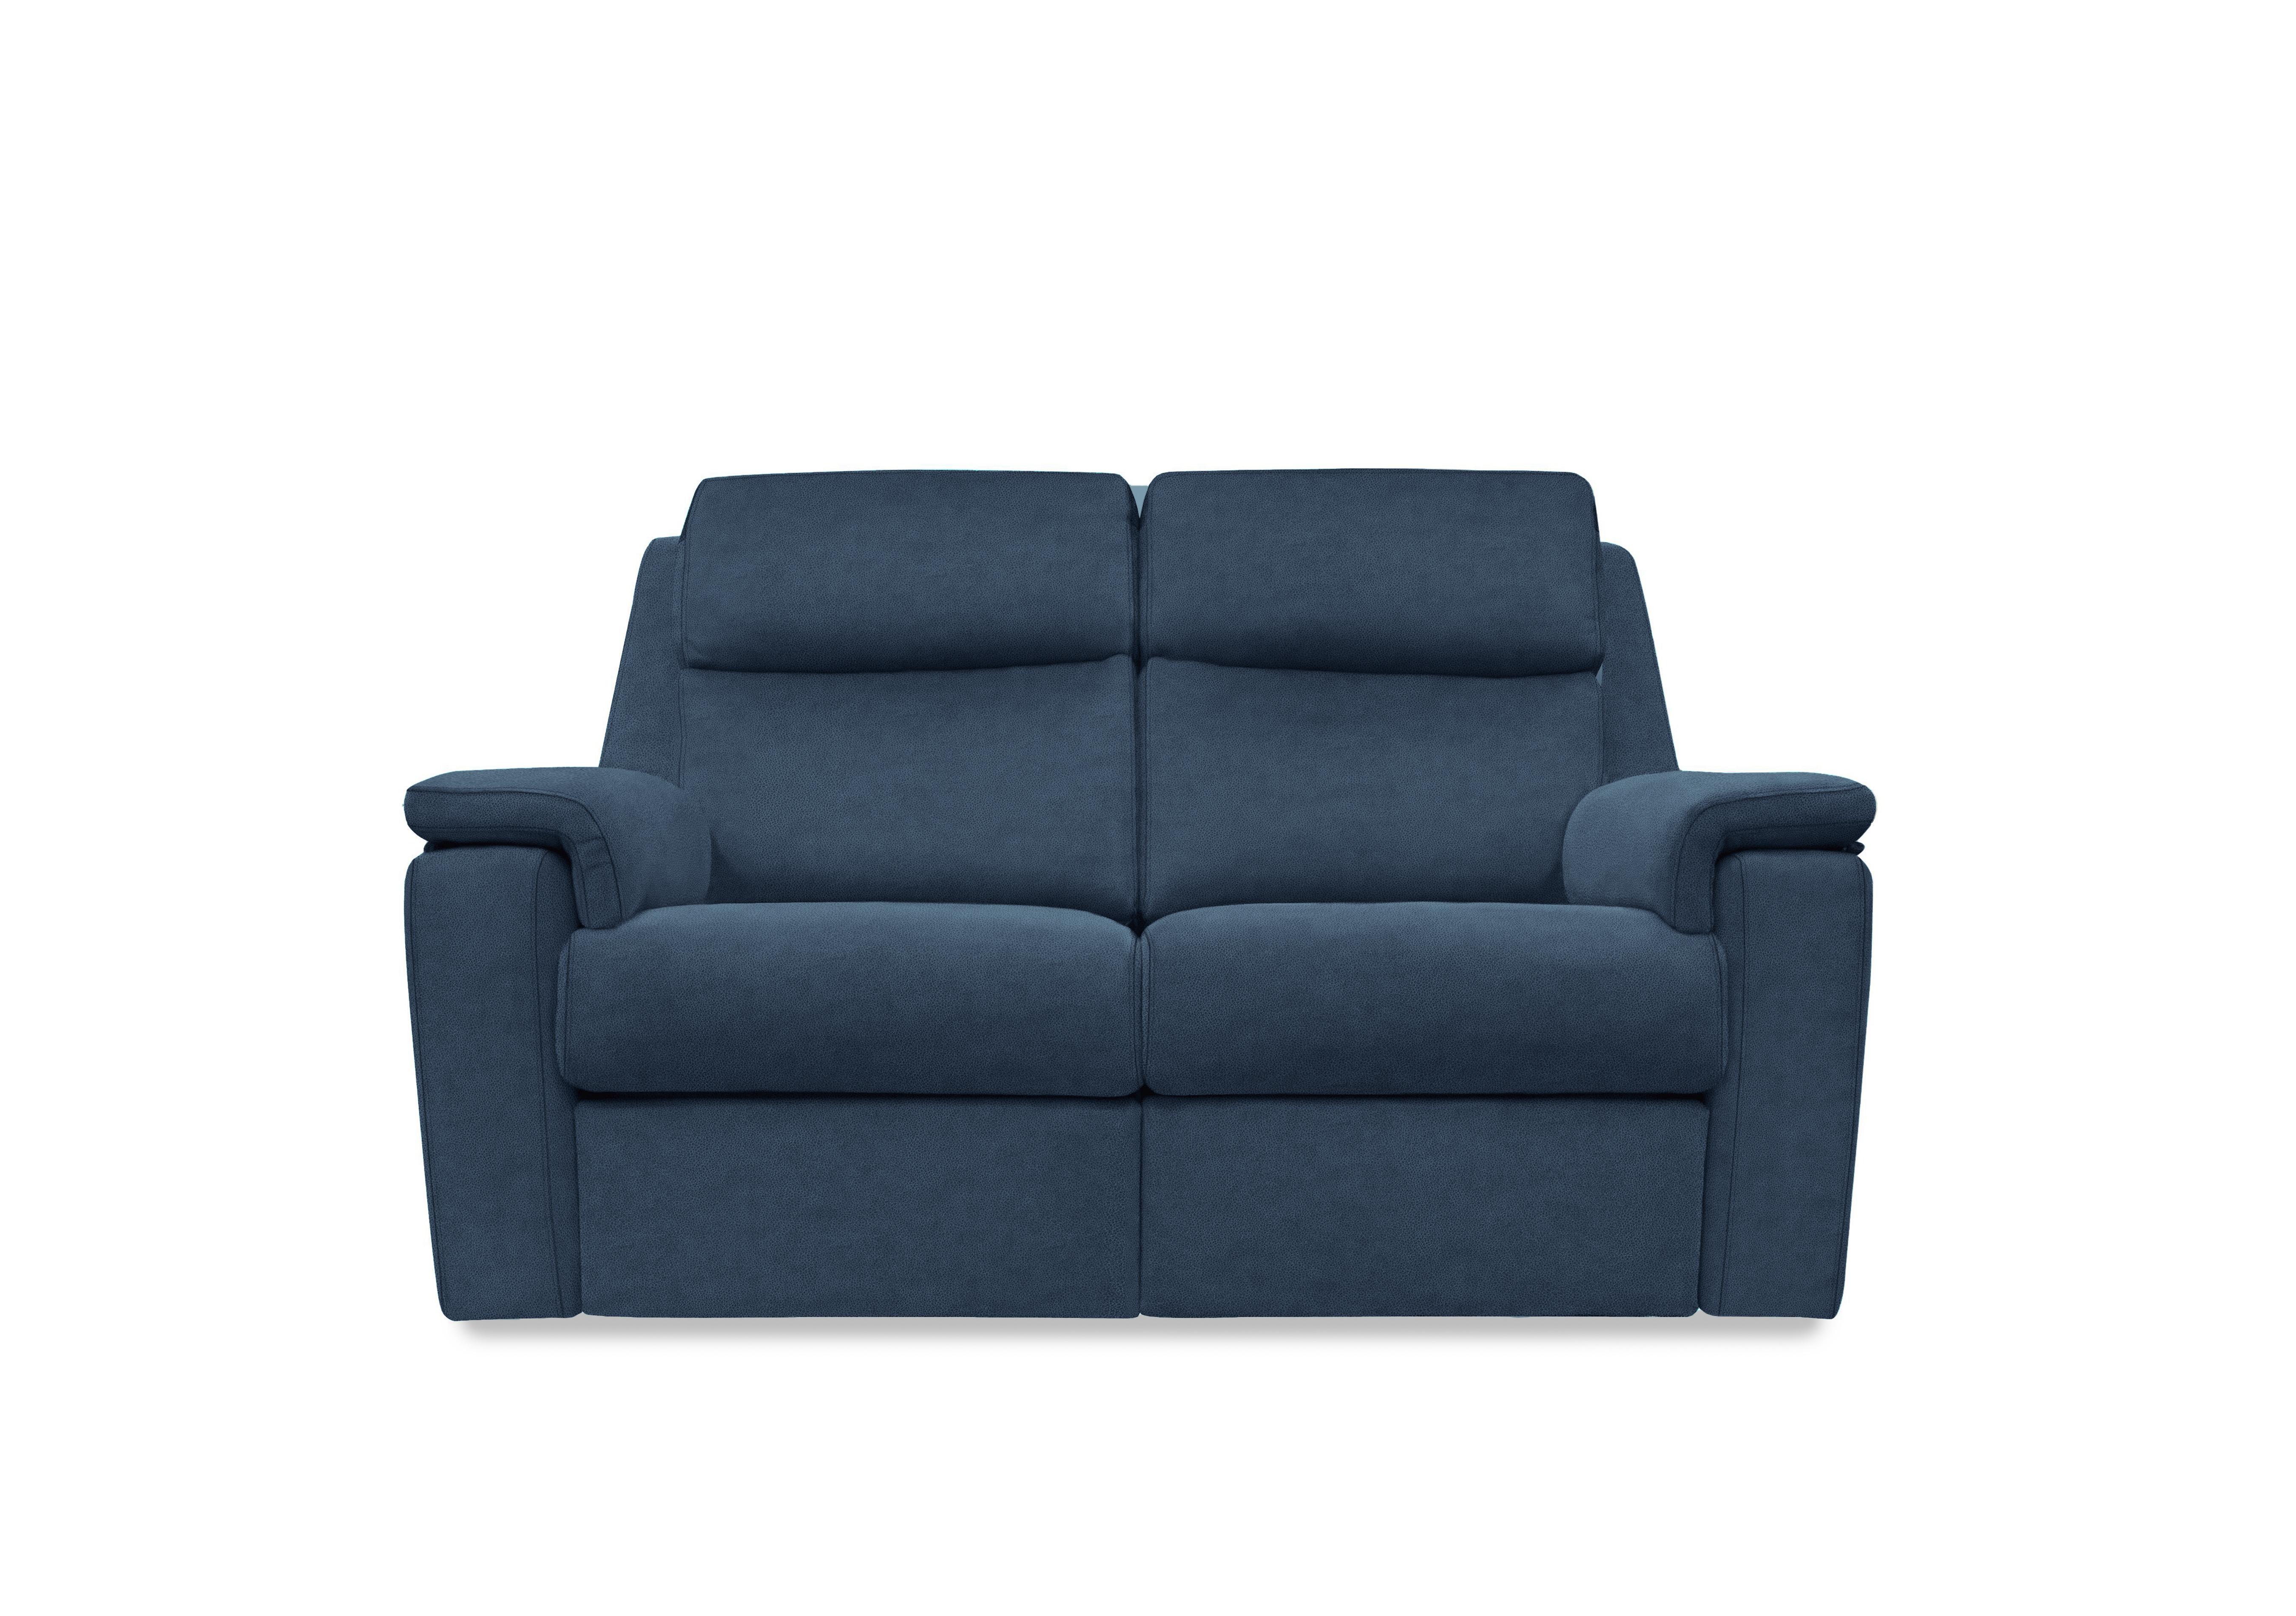 Thornbury 2 Seater Fabric Sofa in A125 Stingray Indigo on Furniture Village